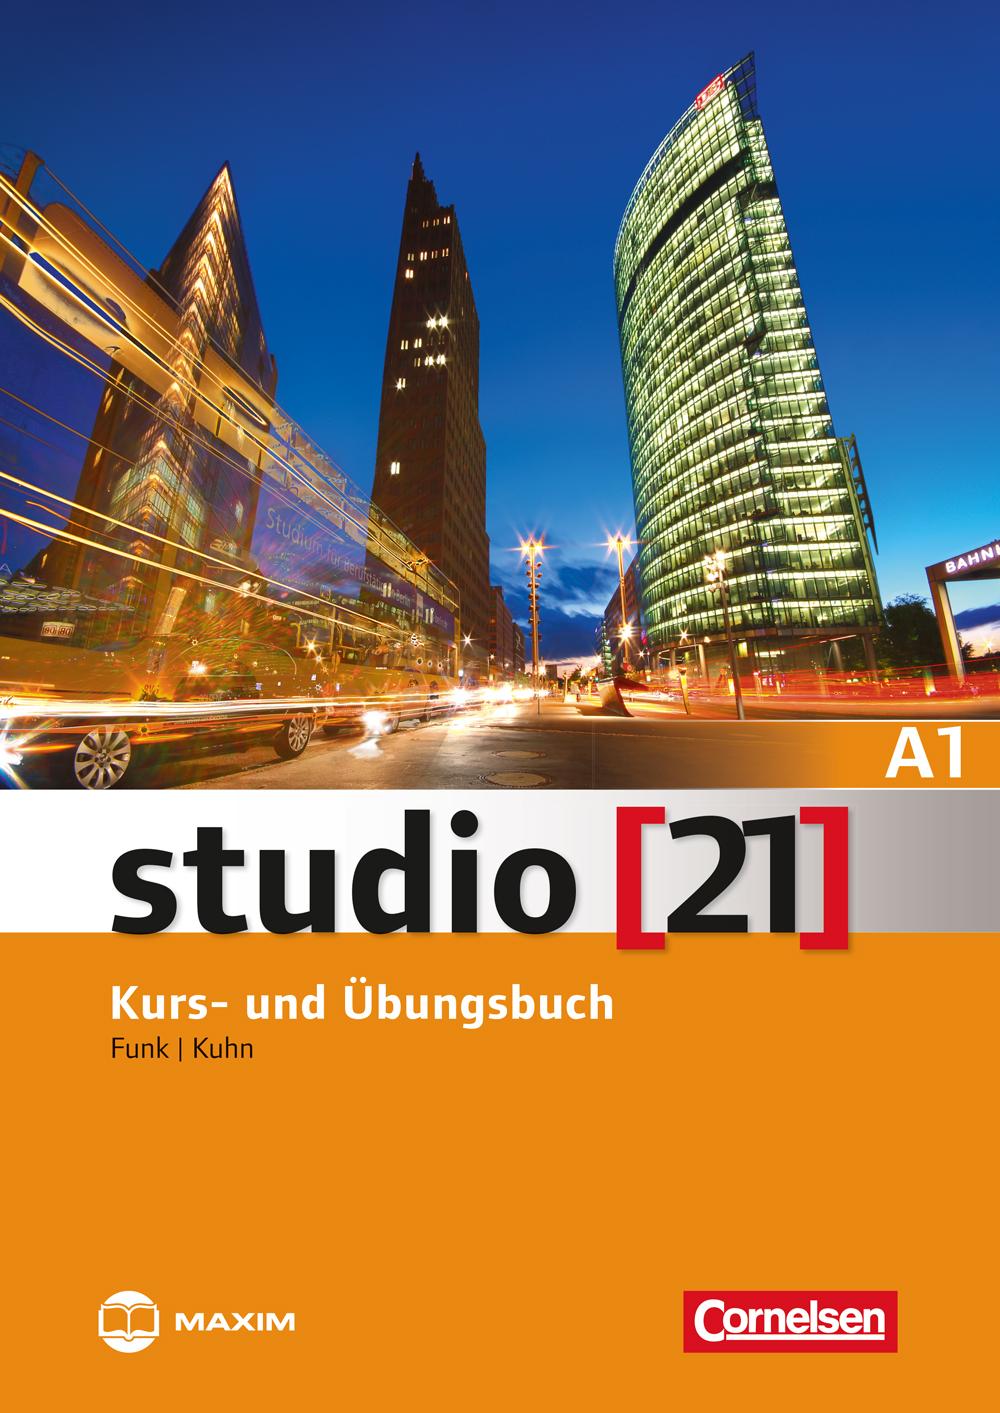 Christina Kuhn, Hermann Funk - studio (21) A1 Kurs- und Übungsbuch